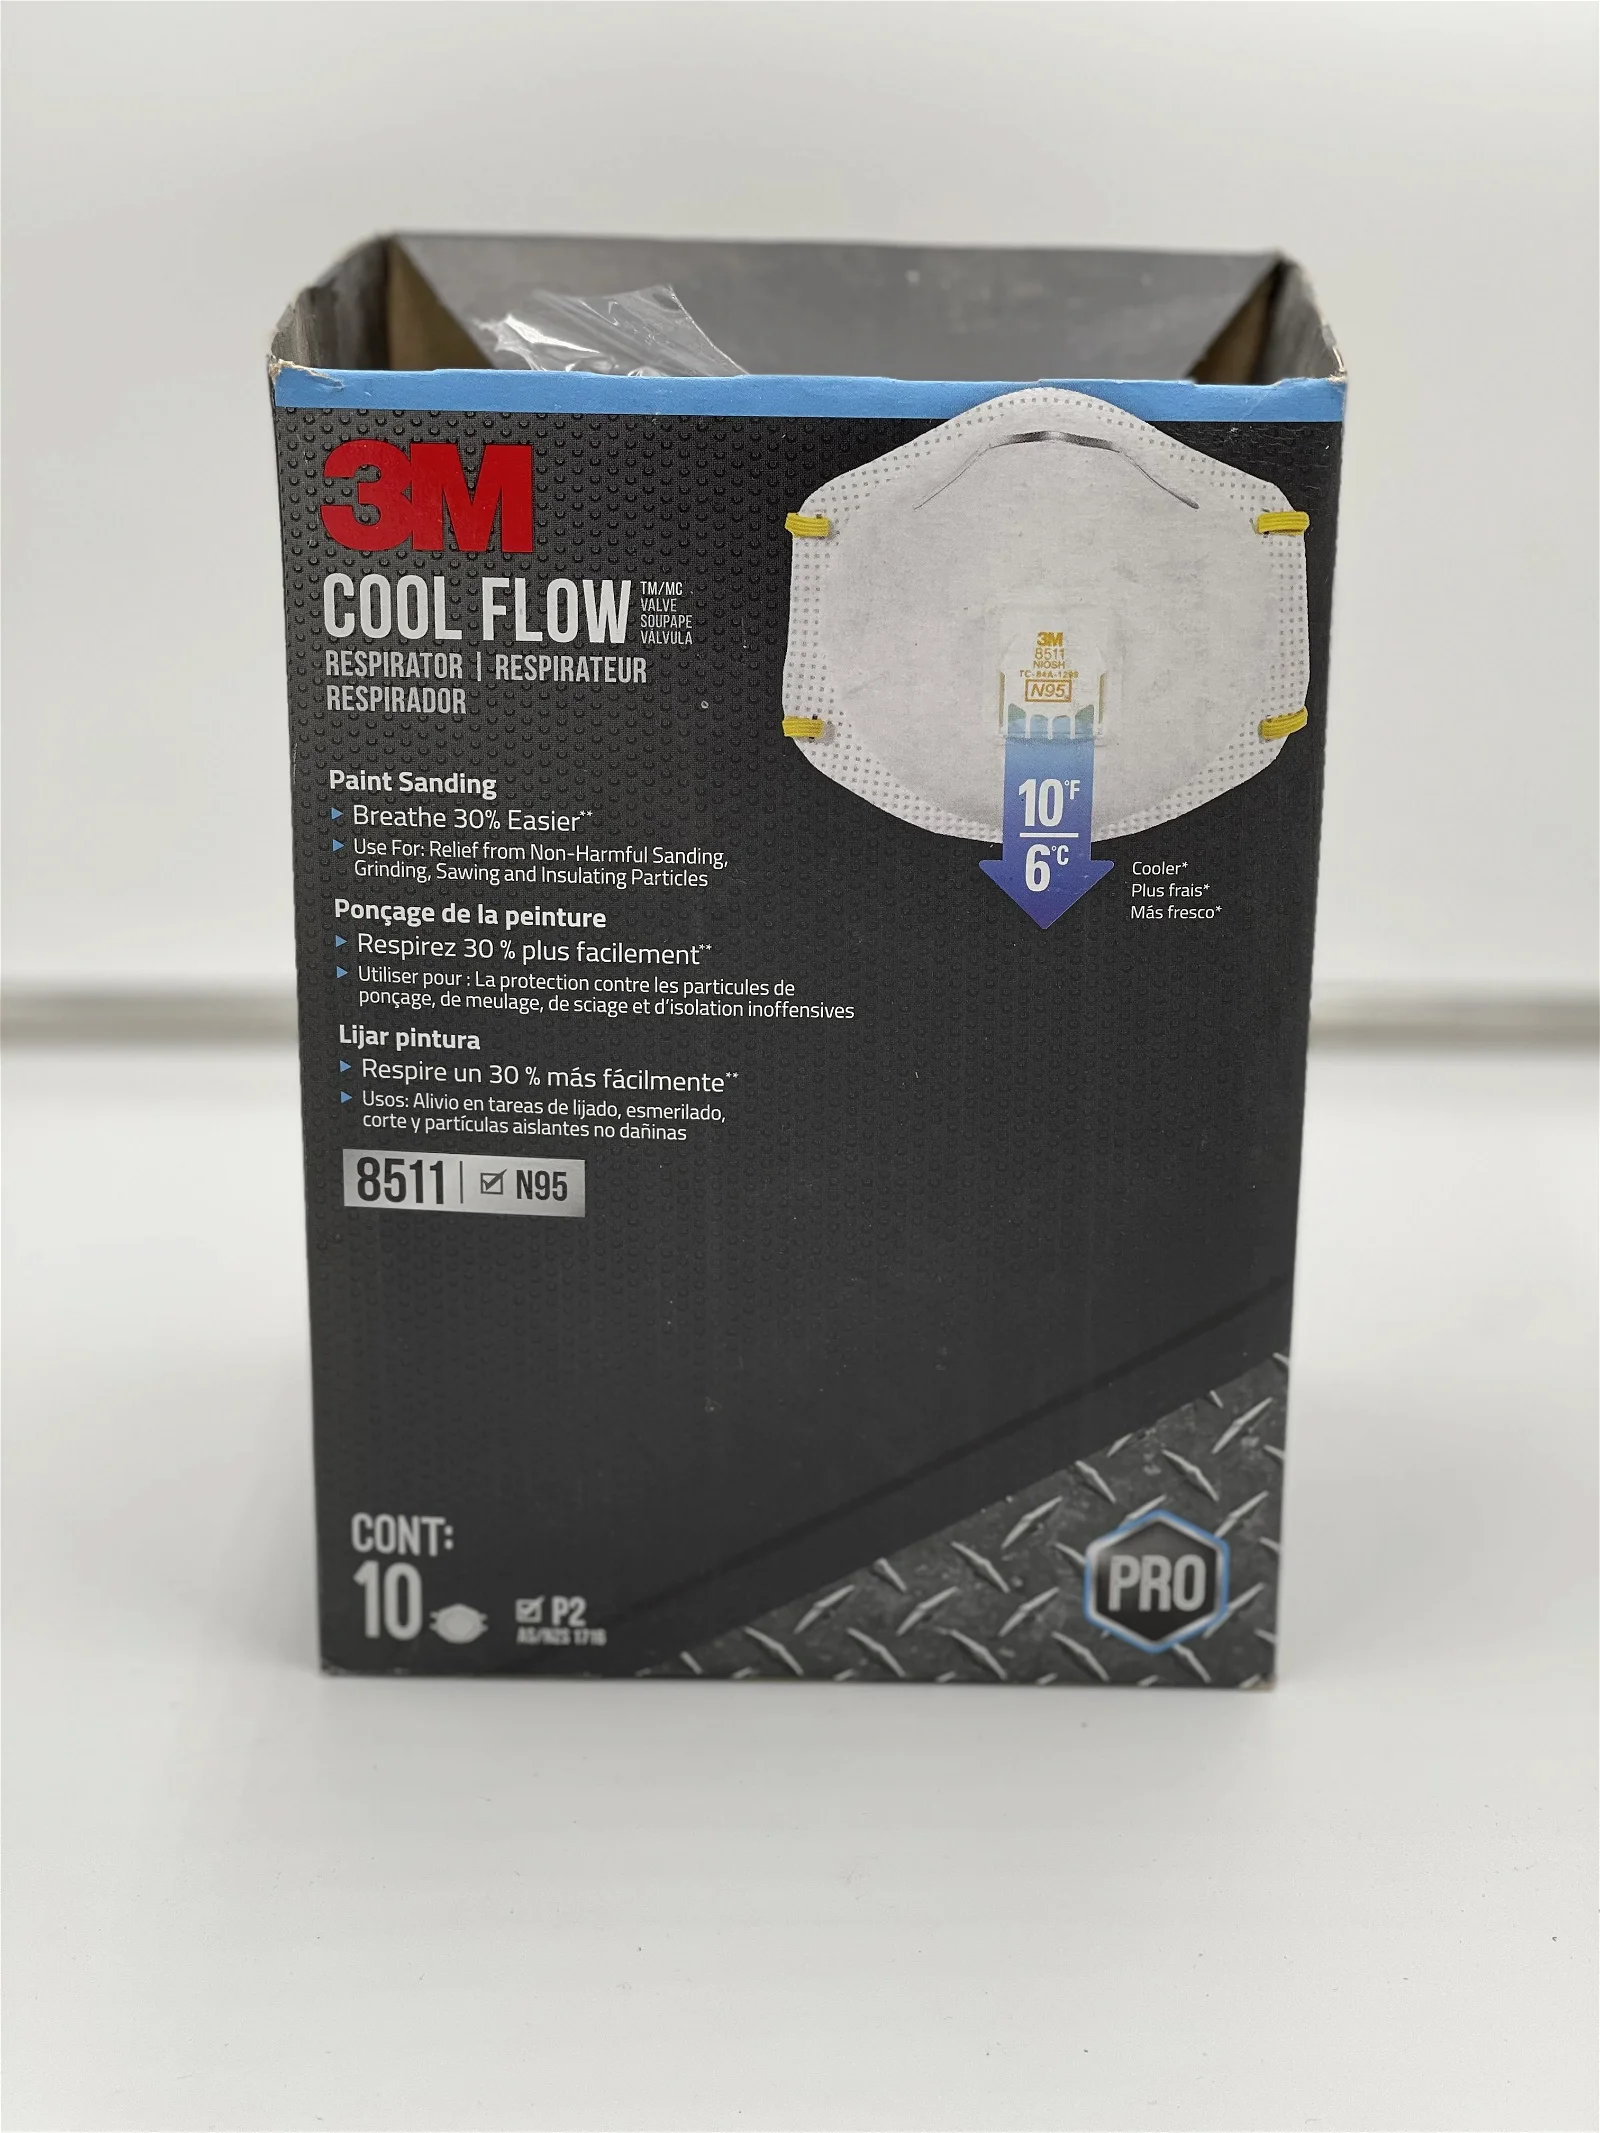 3M Cool Flow N95 Respirator Masks (10 per Box)